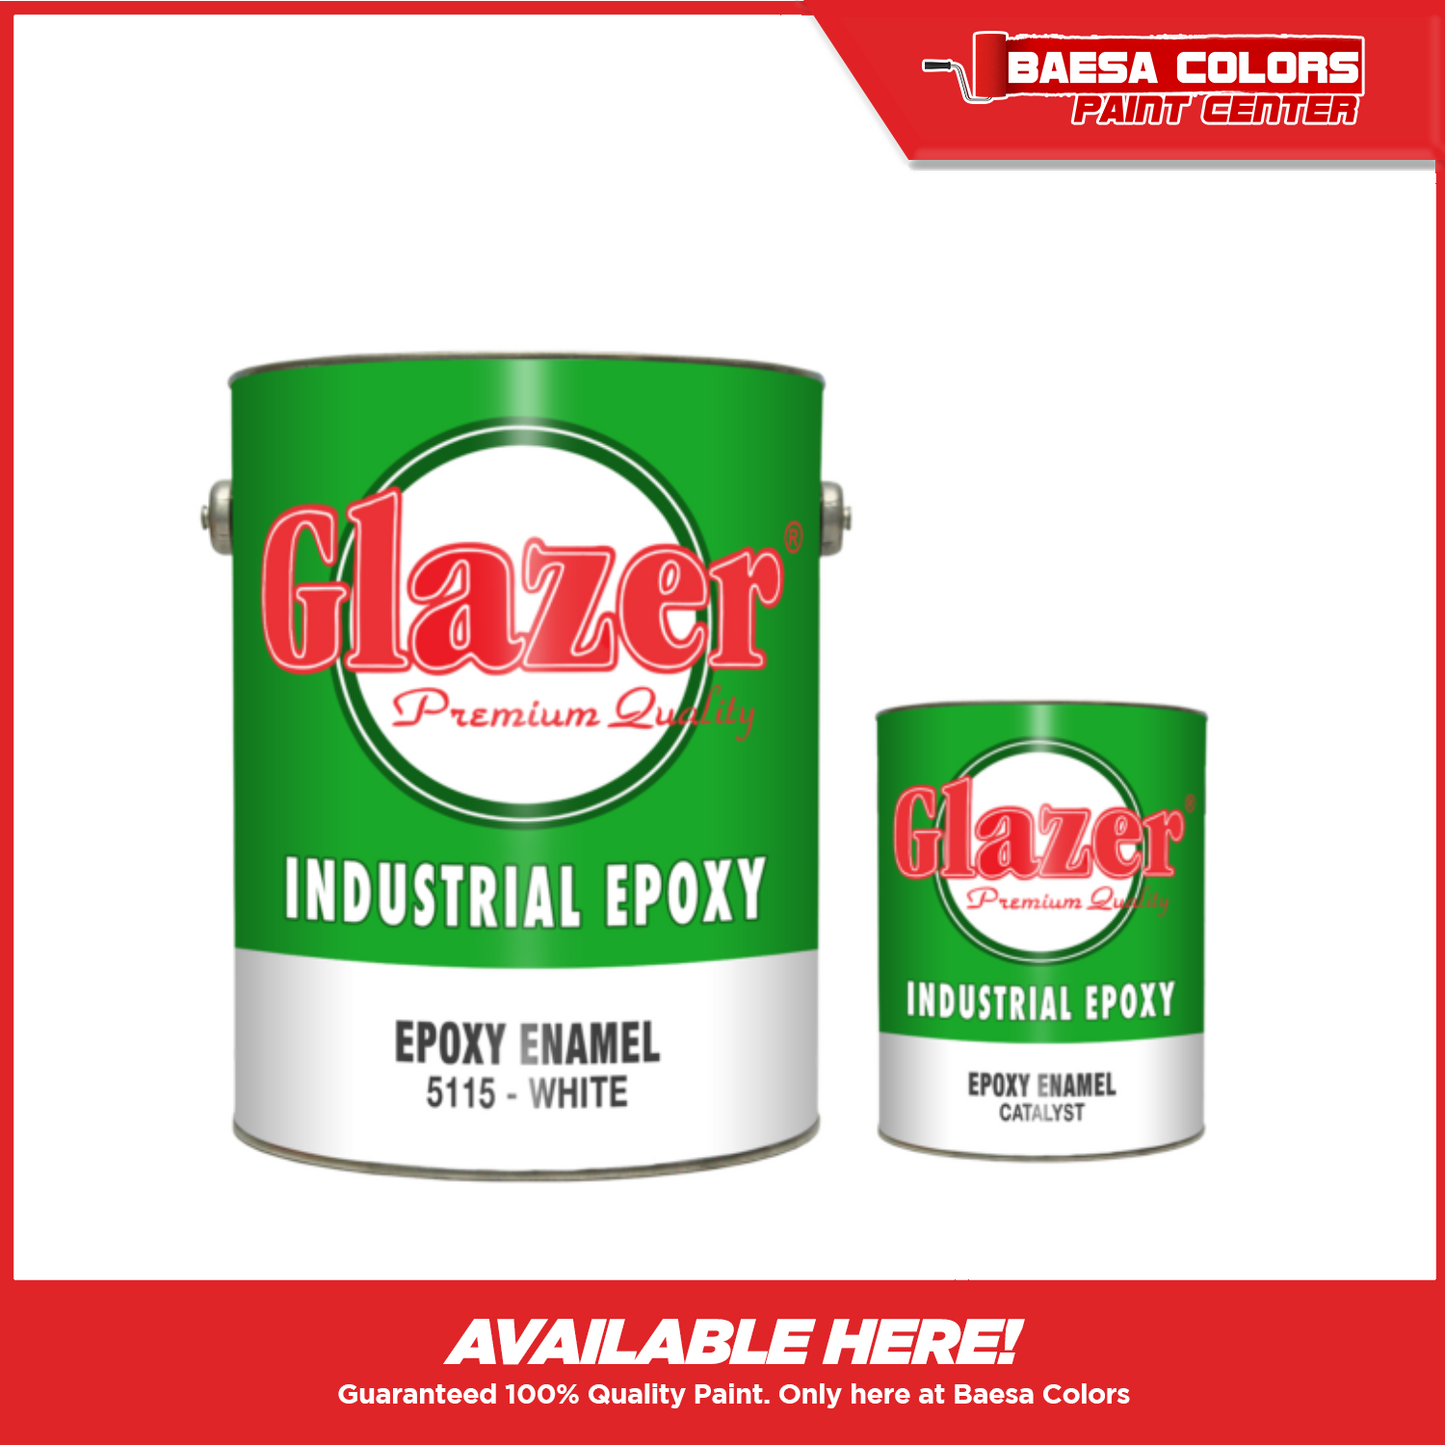 Glazer® Industrial Epoxy Enamel Paint 4-Liter